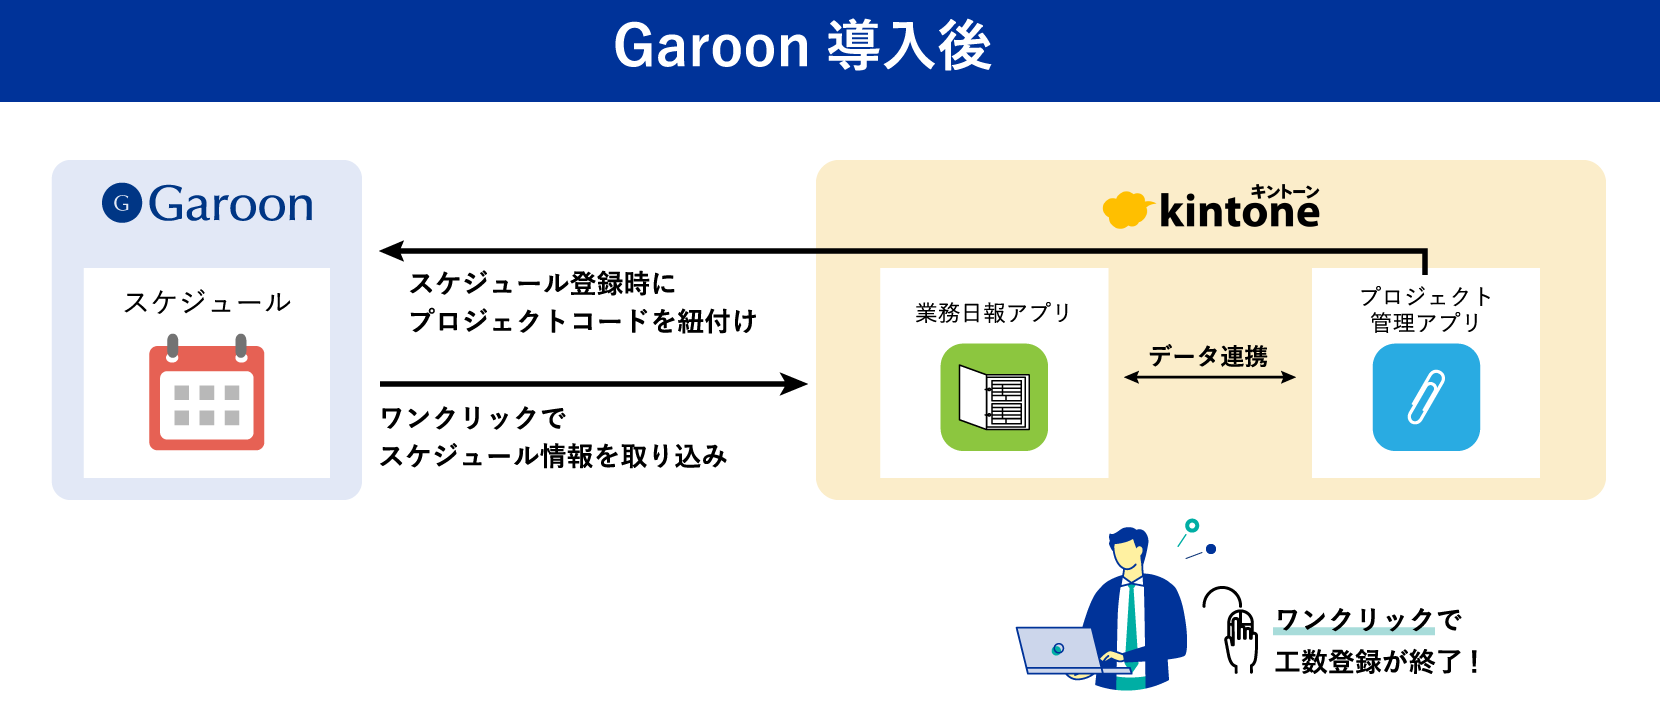 Garoon導入後の工数入力のイメージ